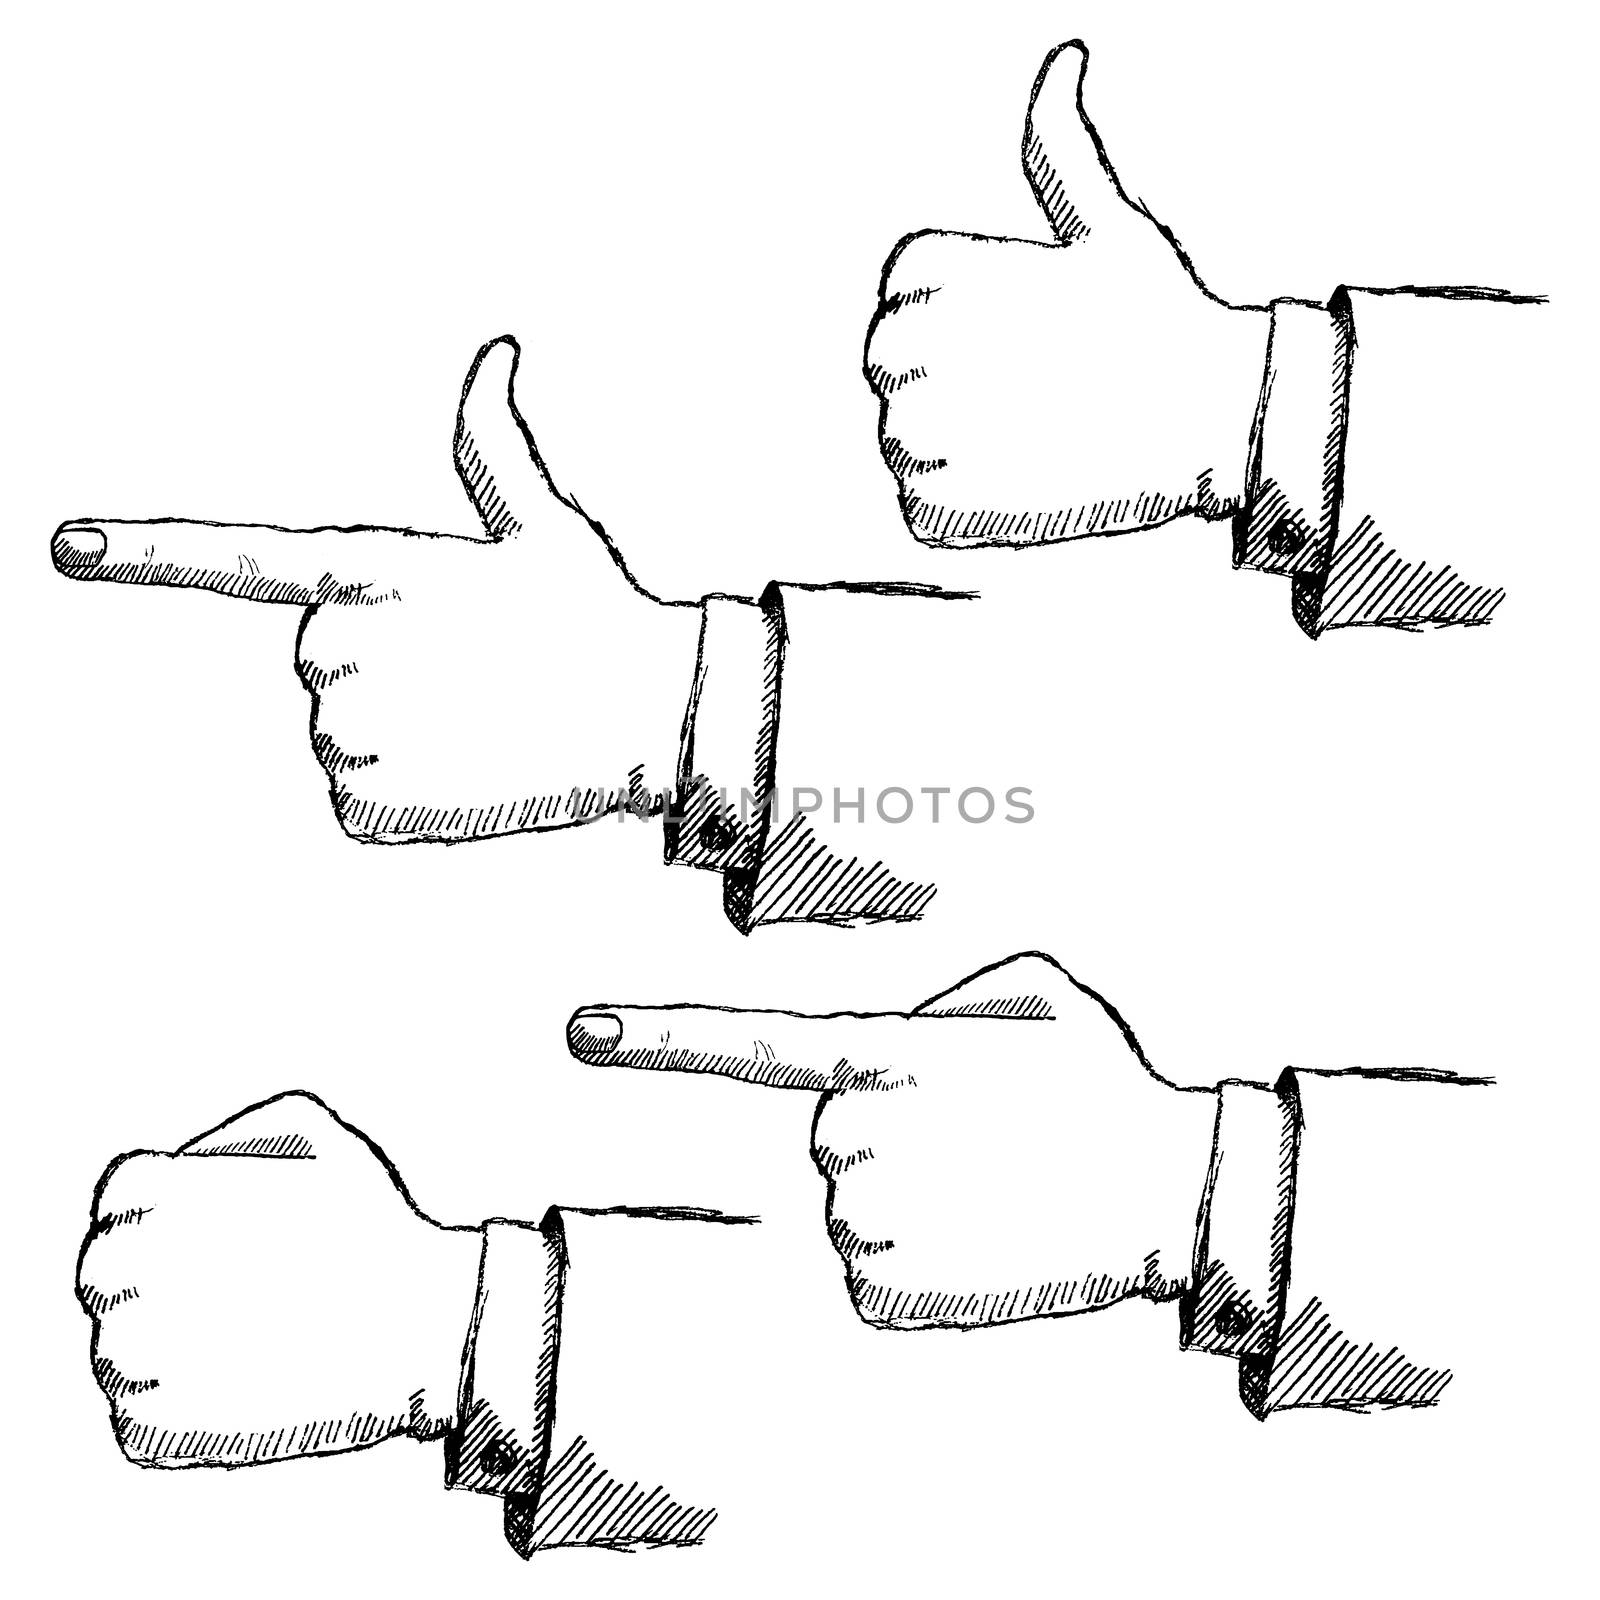 Handdrawn sketch hands set isolated on white background by Lemon_workshop